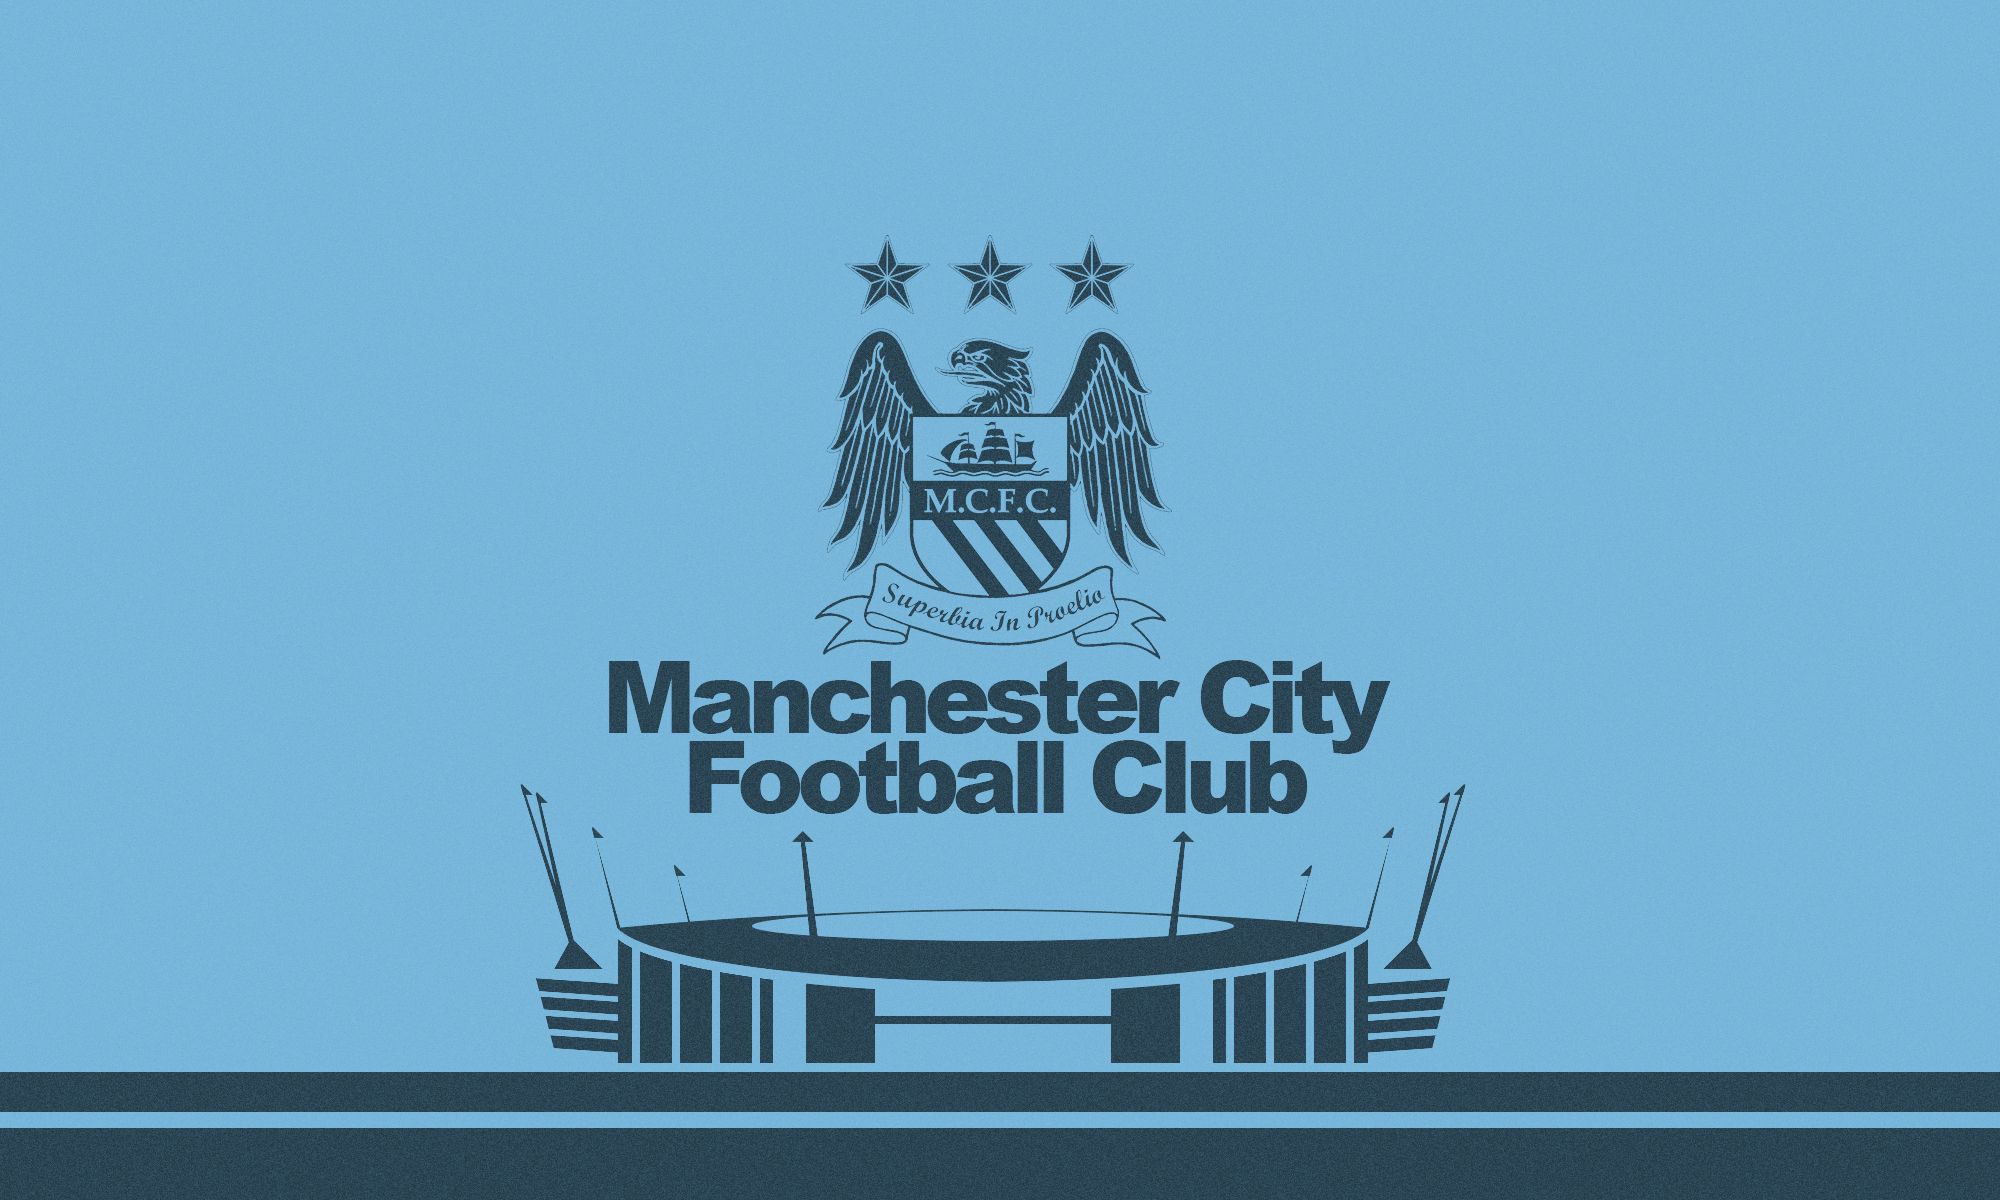 manchester city logo Large Image. Manchester city wallpaper, Manchester city logo, Manchester city